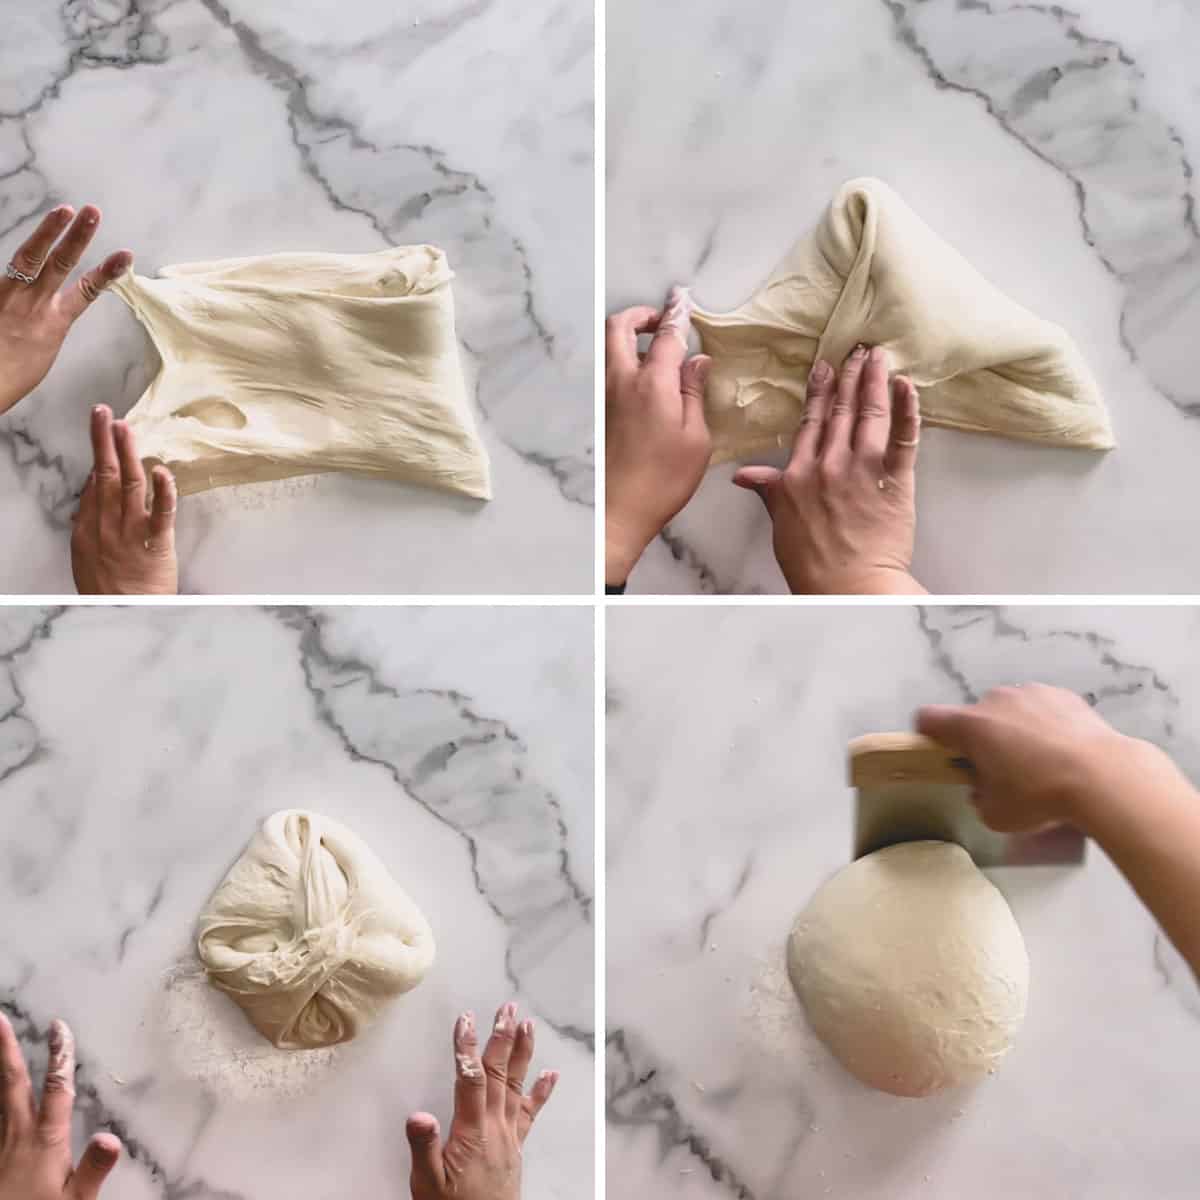 hand shaping bread dough into a ball